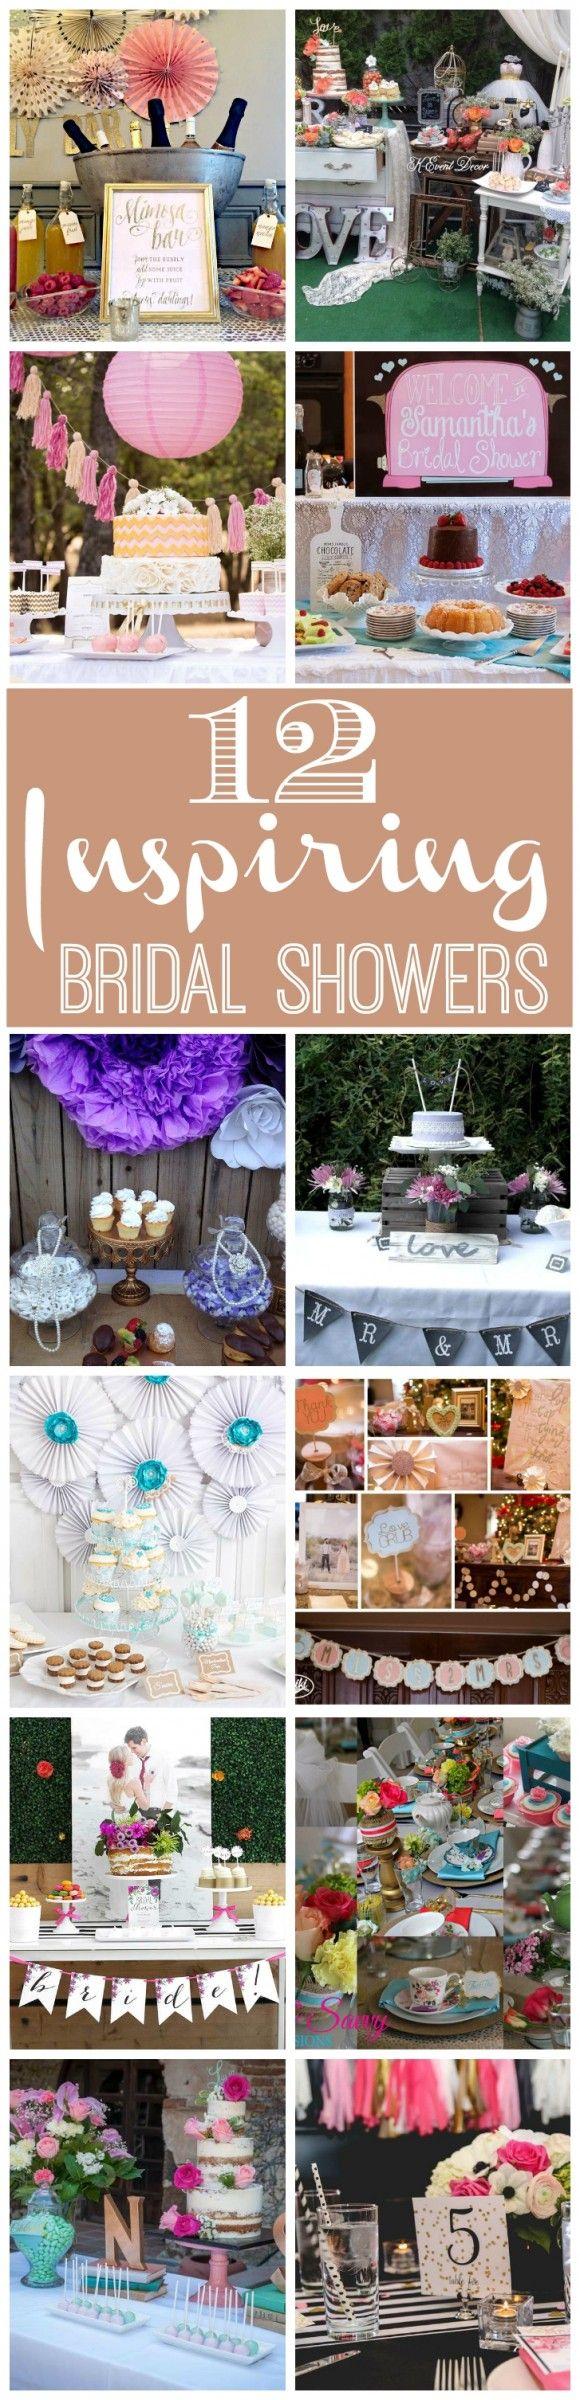 Wedding - 12 Inspiring Bridal Showers